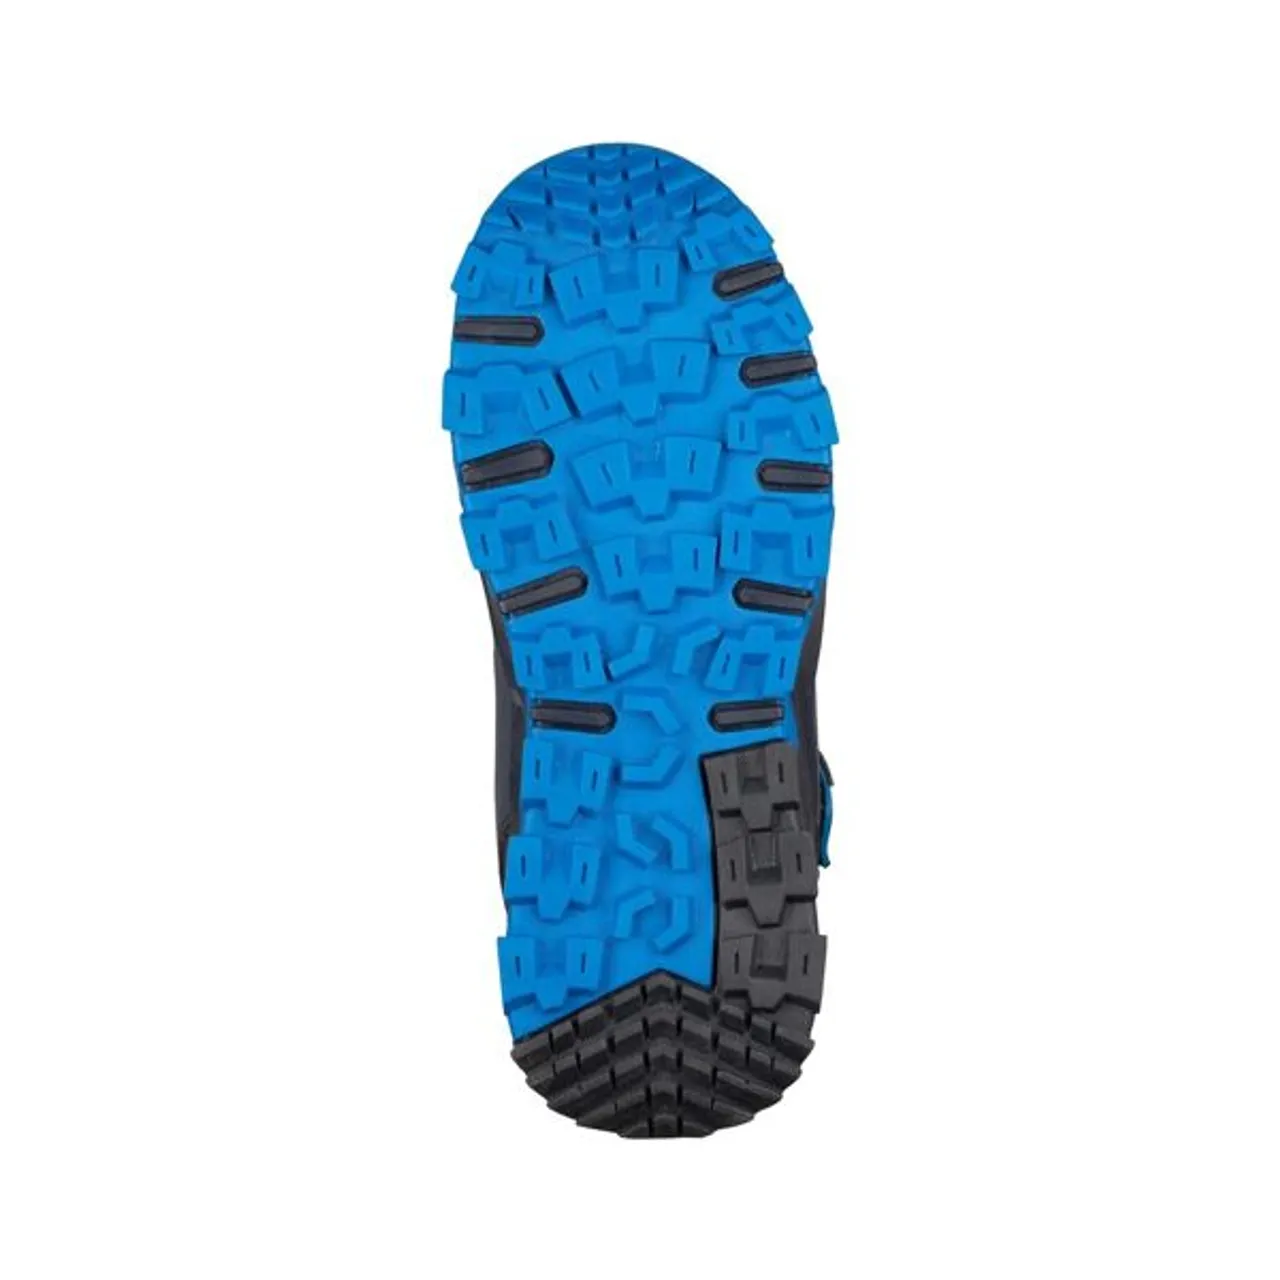 Wanderschuh TROLLKIDS "Tronfjell Hiker Mid" Gr. 37, blau (navy, medium blue) Schuhe Kinder wasserdicht